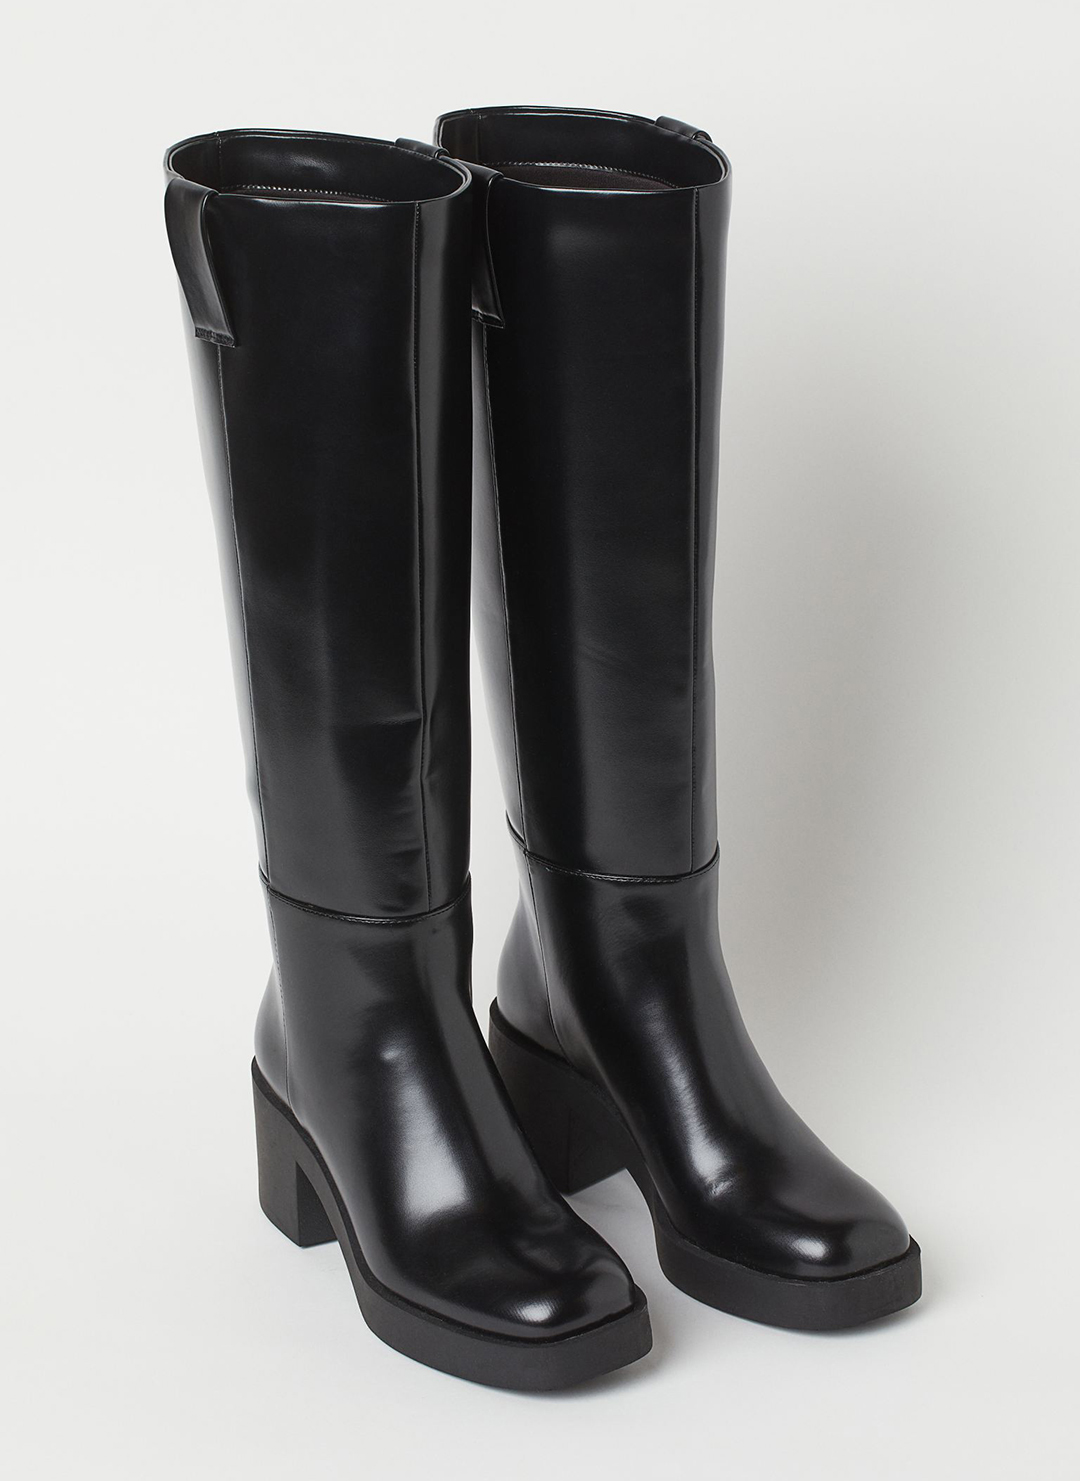 H&M - Knee High Boots $99.99